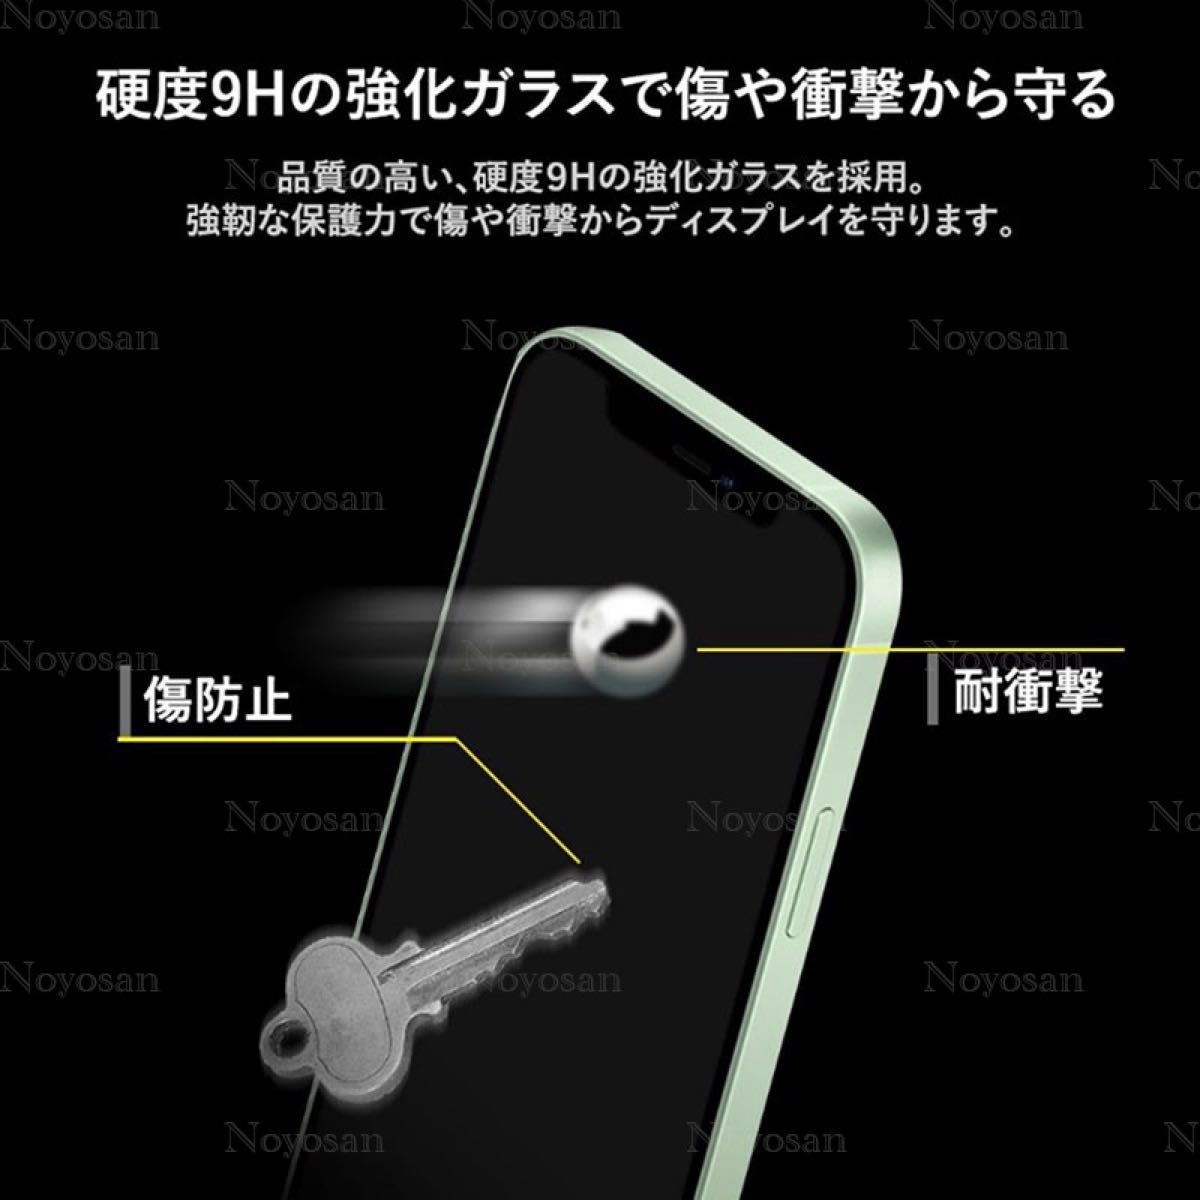 iPhone 15Plus / iPhone 15ProMax対応 覗き見防止全面保護強化ガラスフィルム